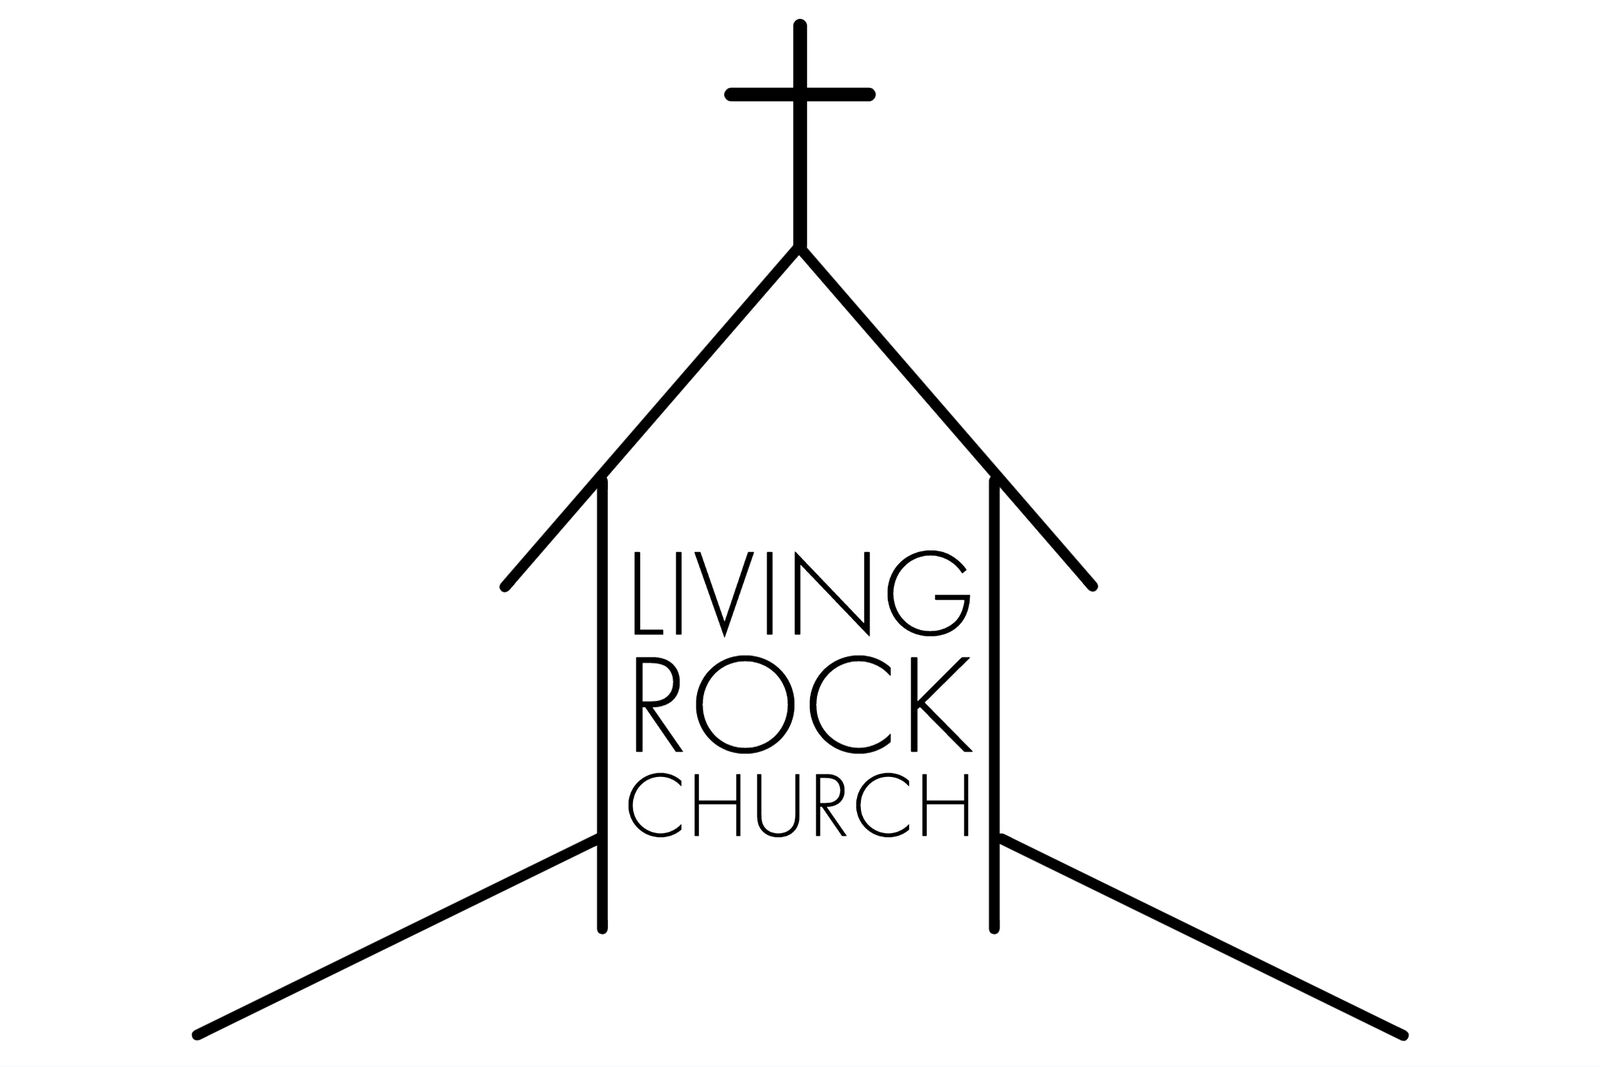 Living Rock Church of Killingworth, inc.